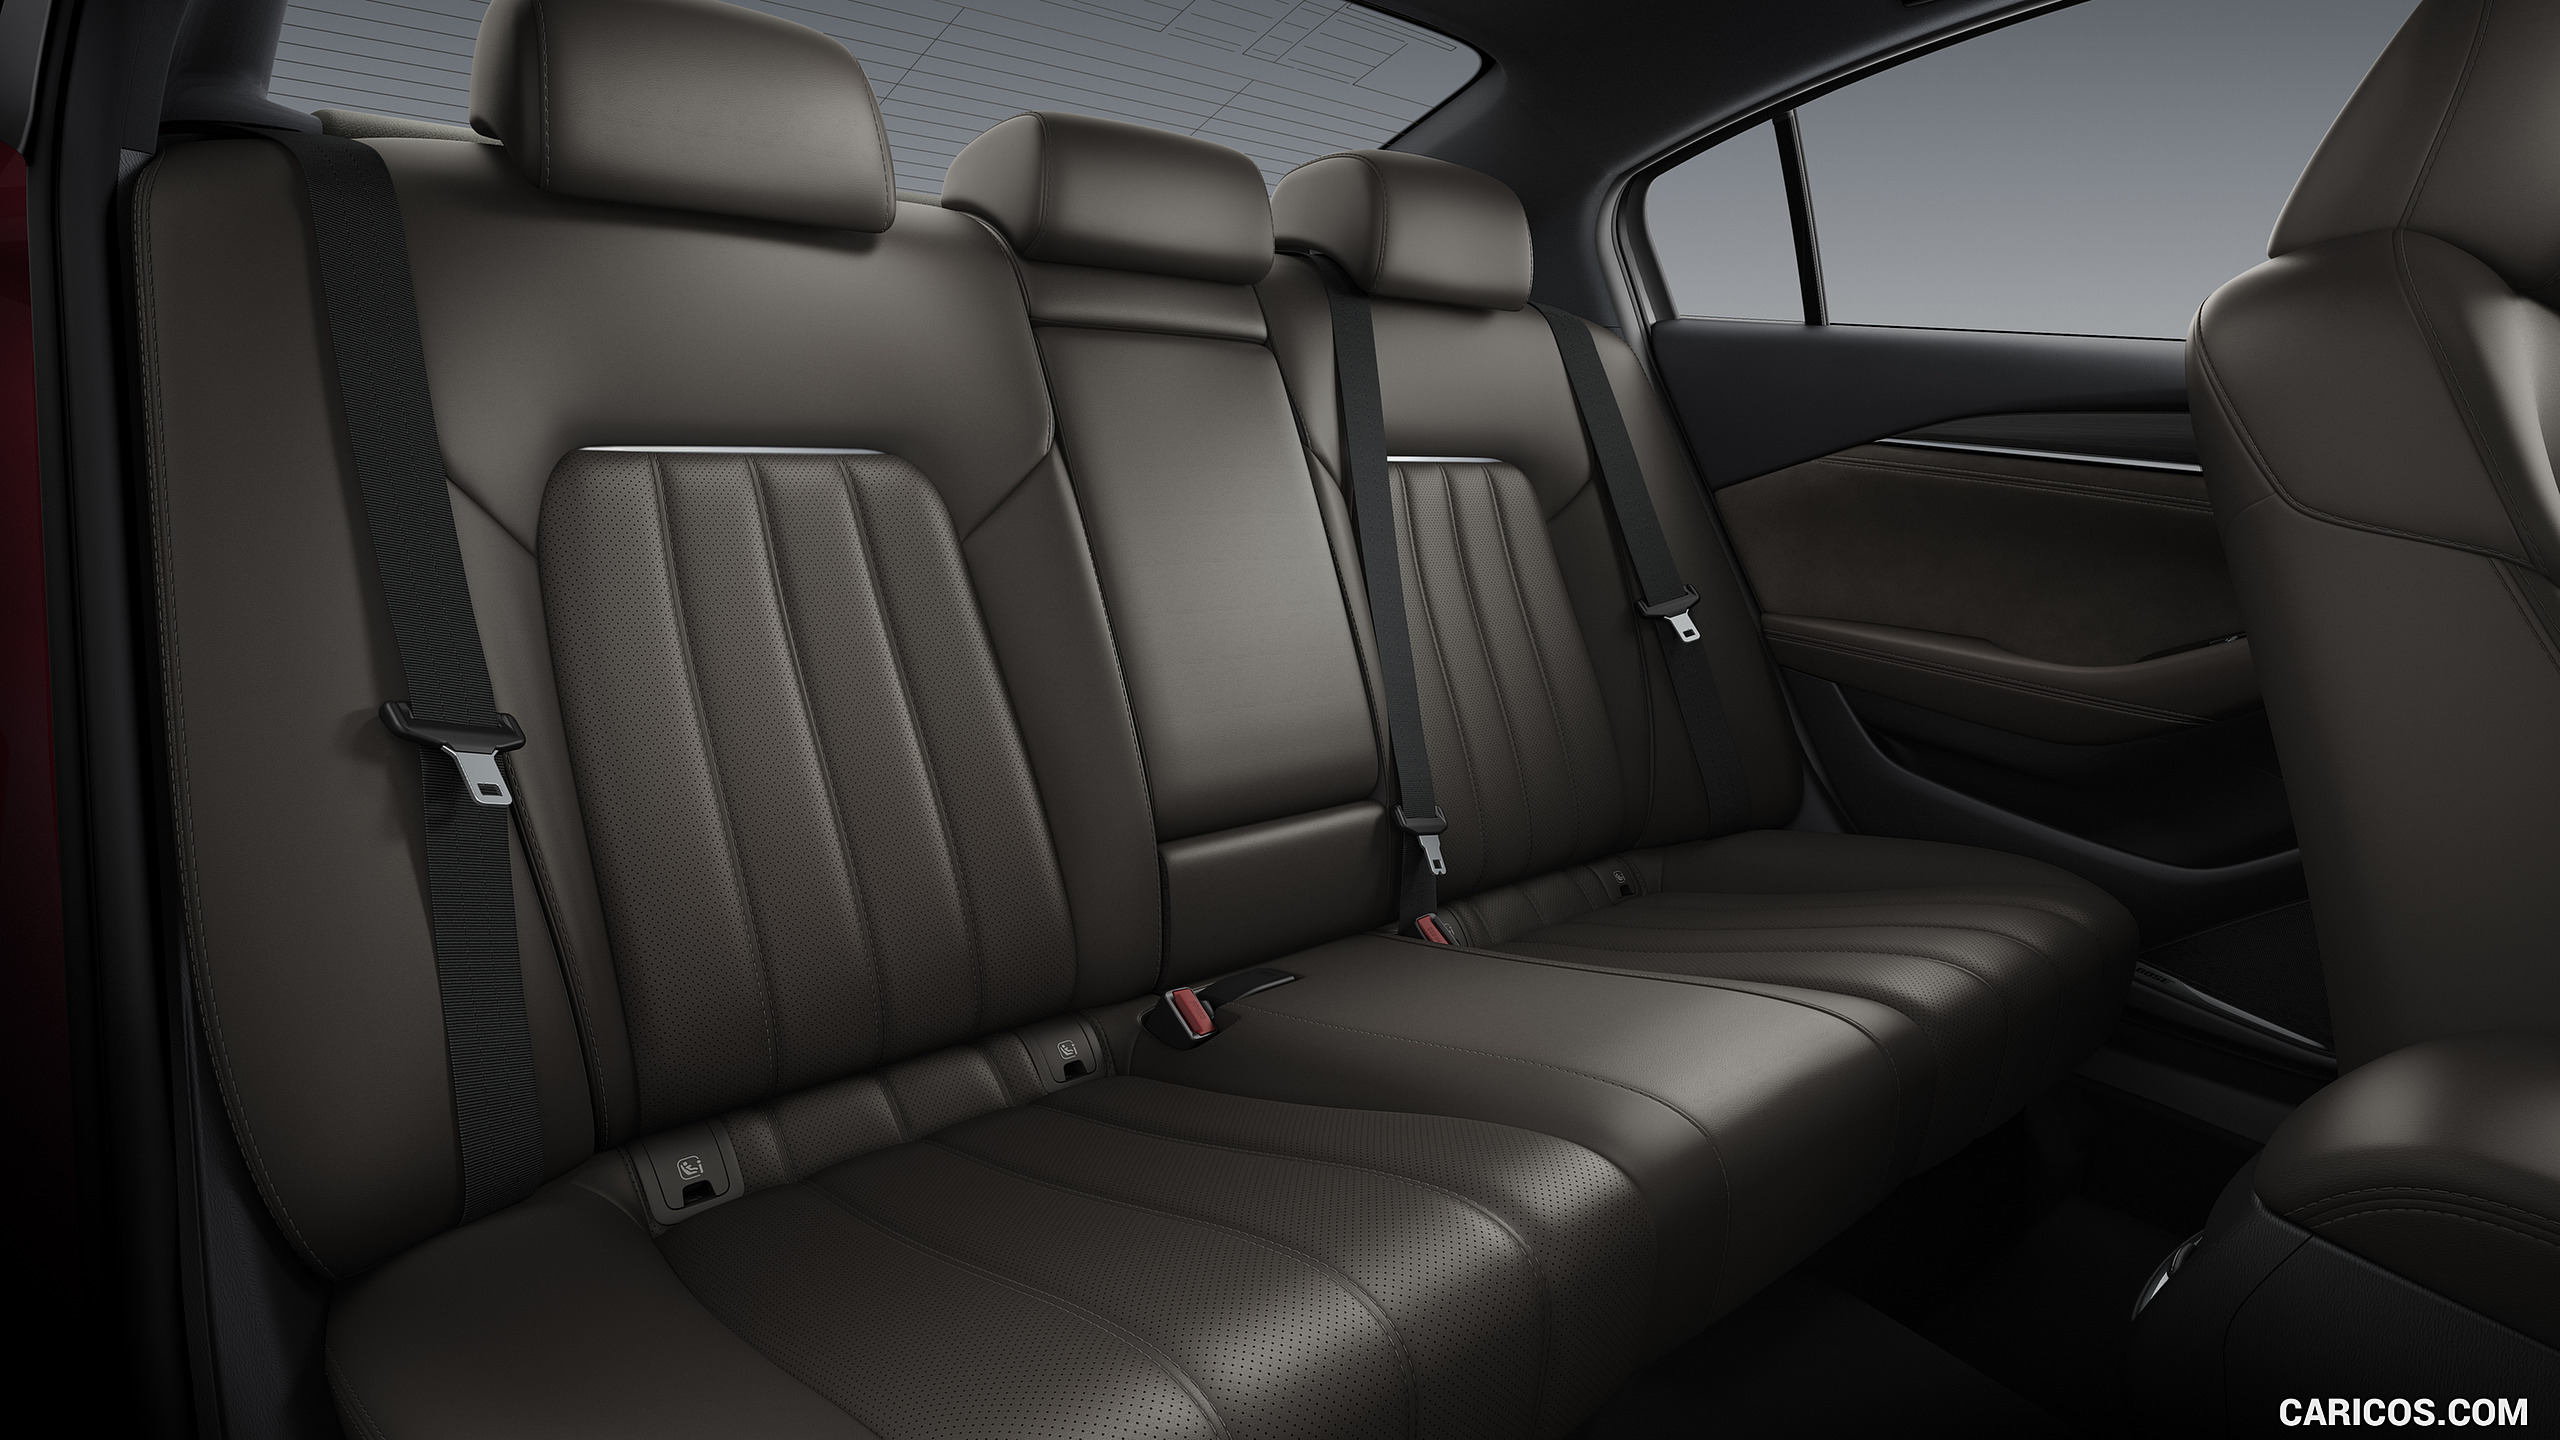 2018 Mazda6 Sedan - Interior, Rear Seats, #23 of 235